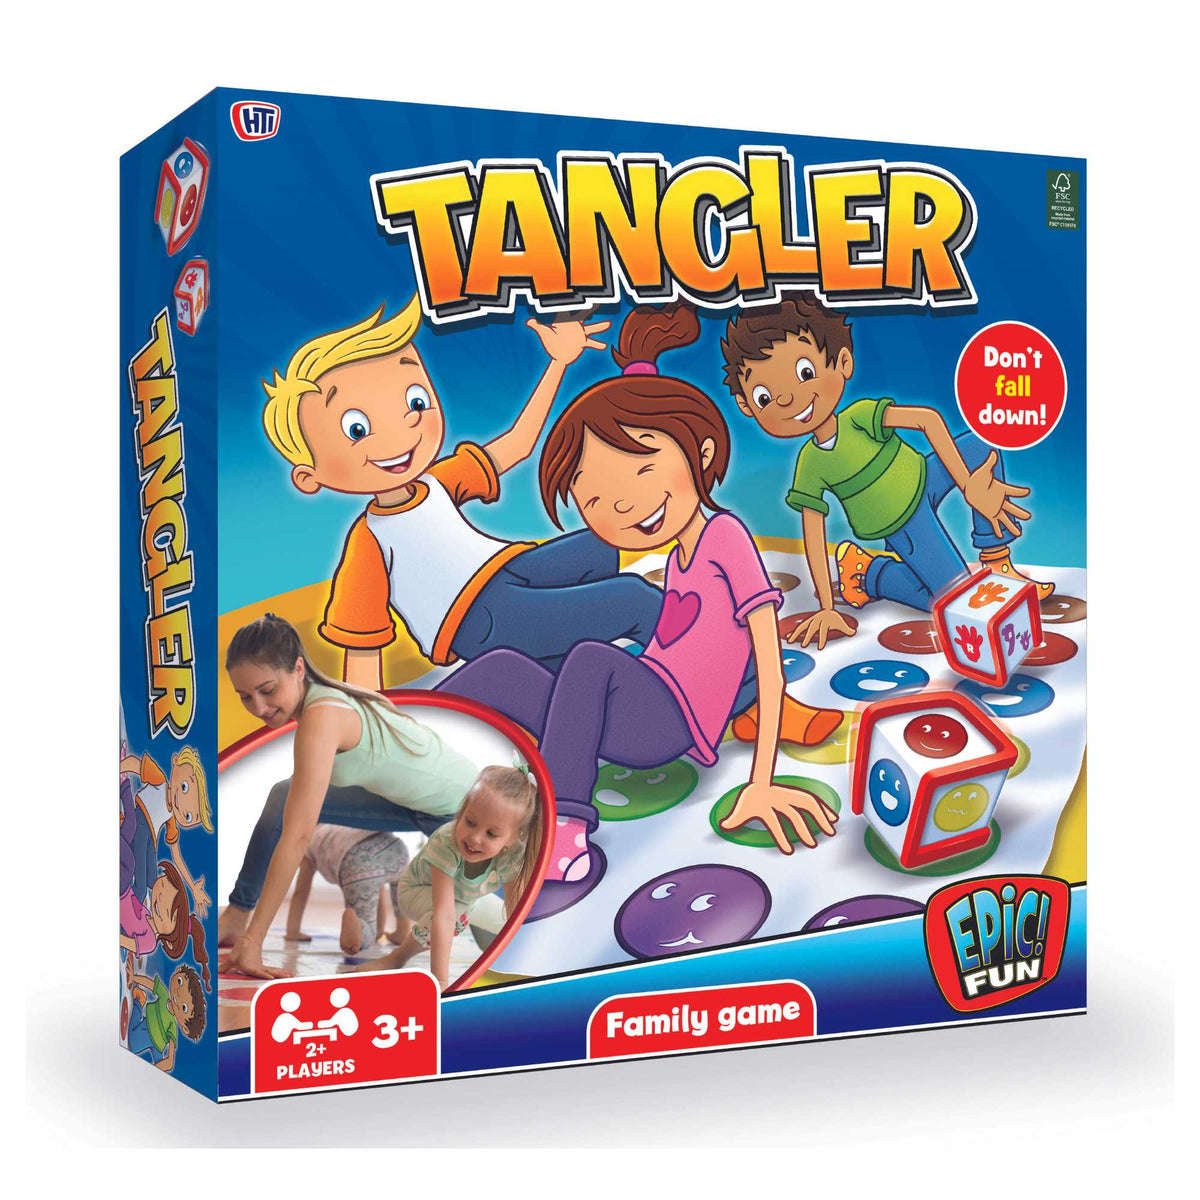 Tangler Game